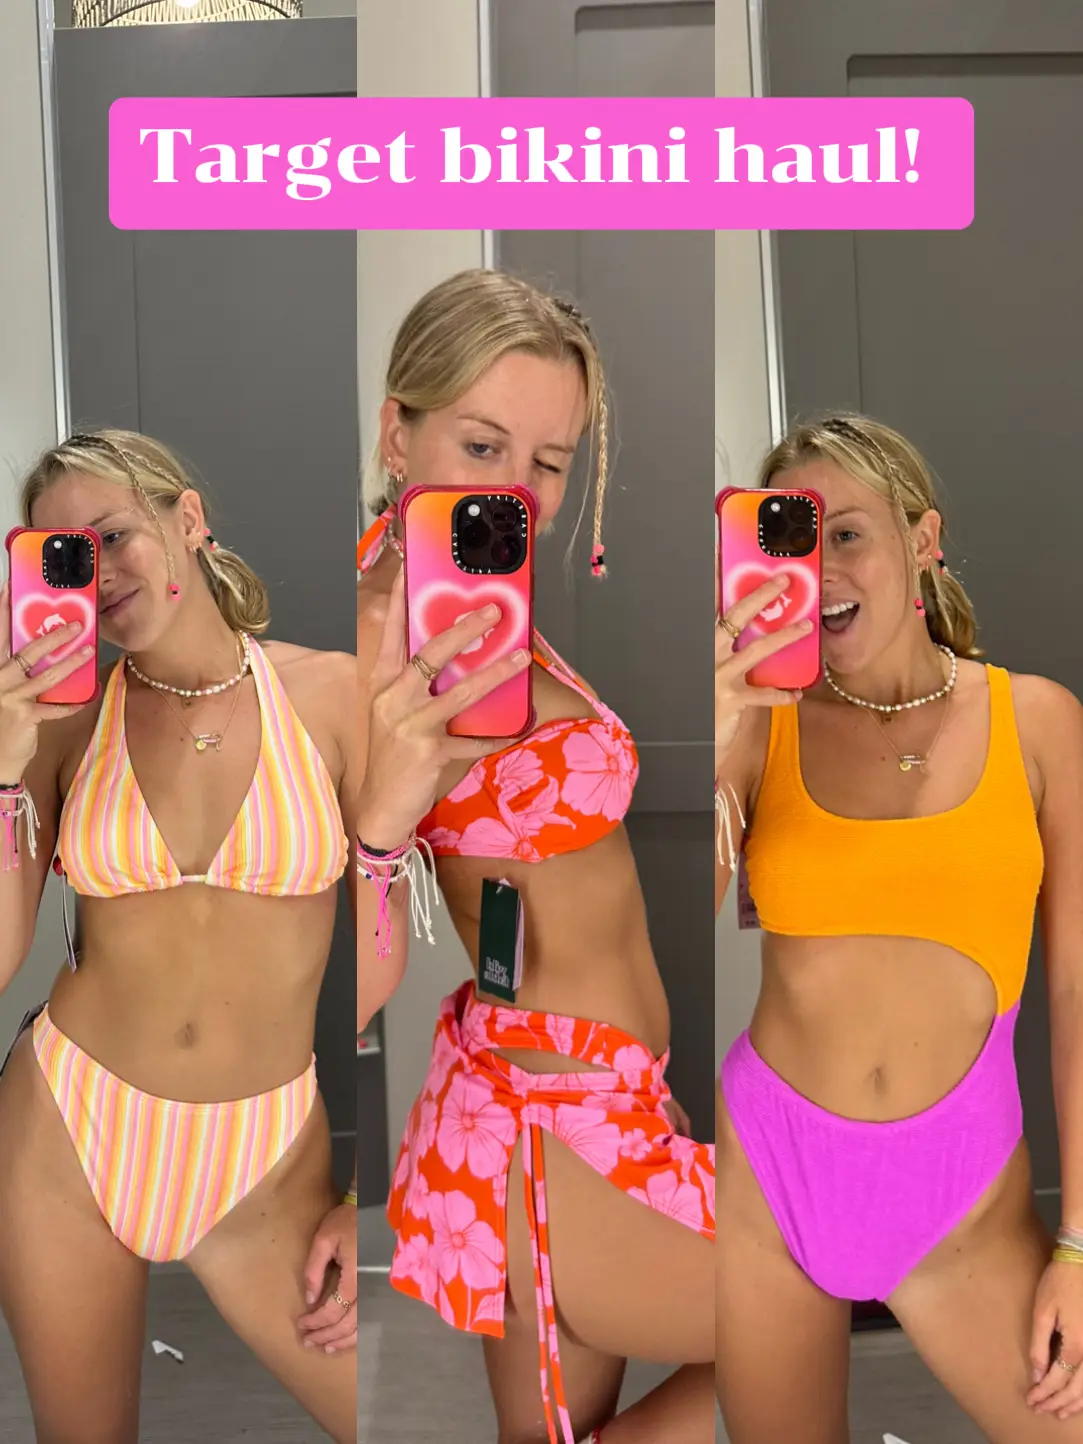 Must-Have Target Bikini Haul  Gallery posted by StephaniePernas